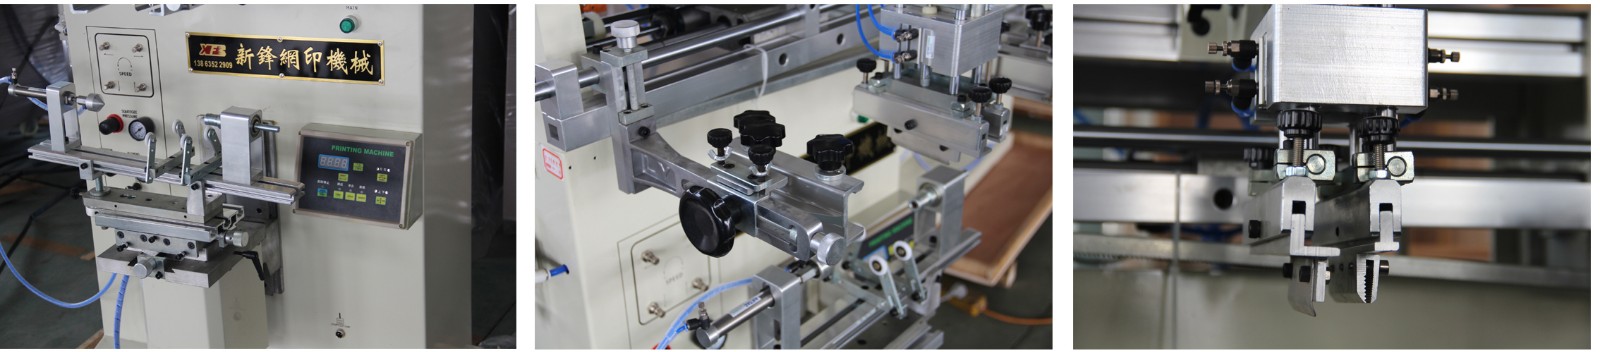 Curved printer semi-automatic type manufacture